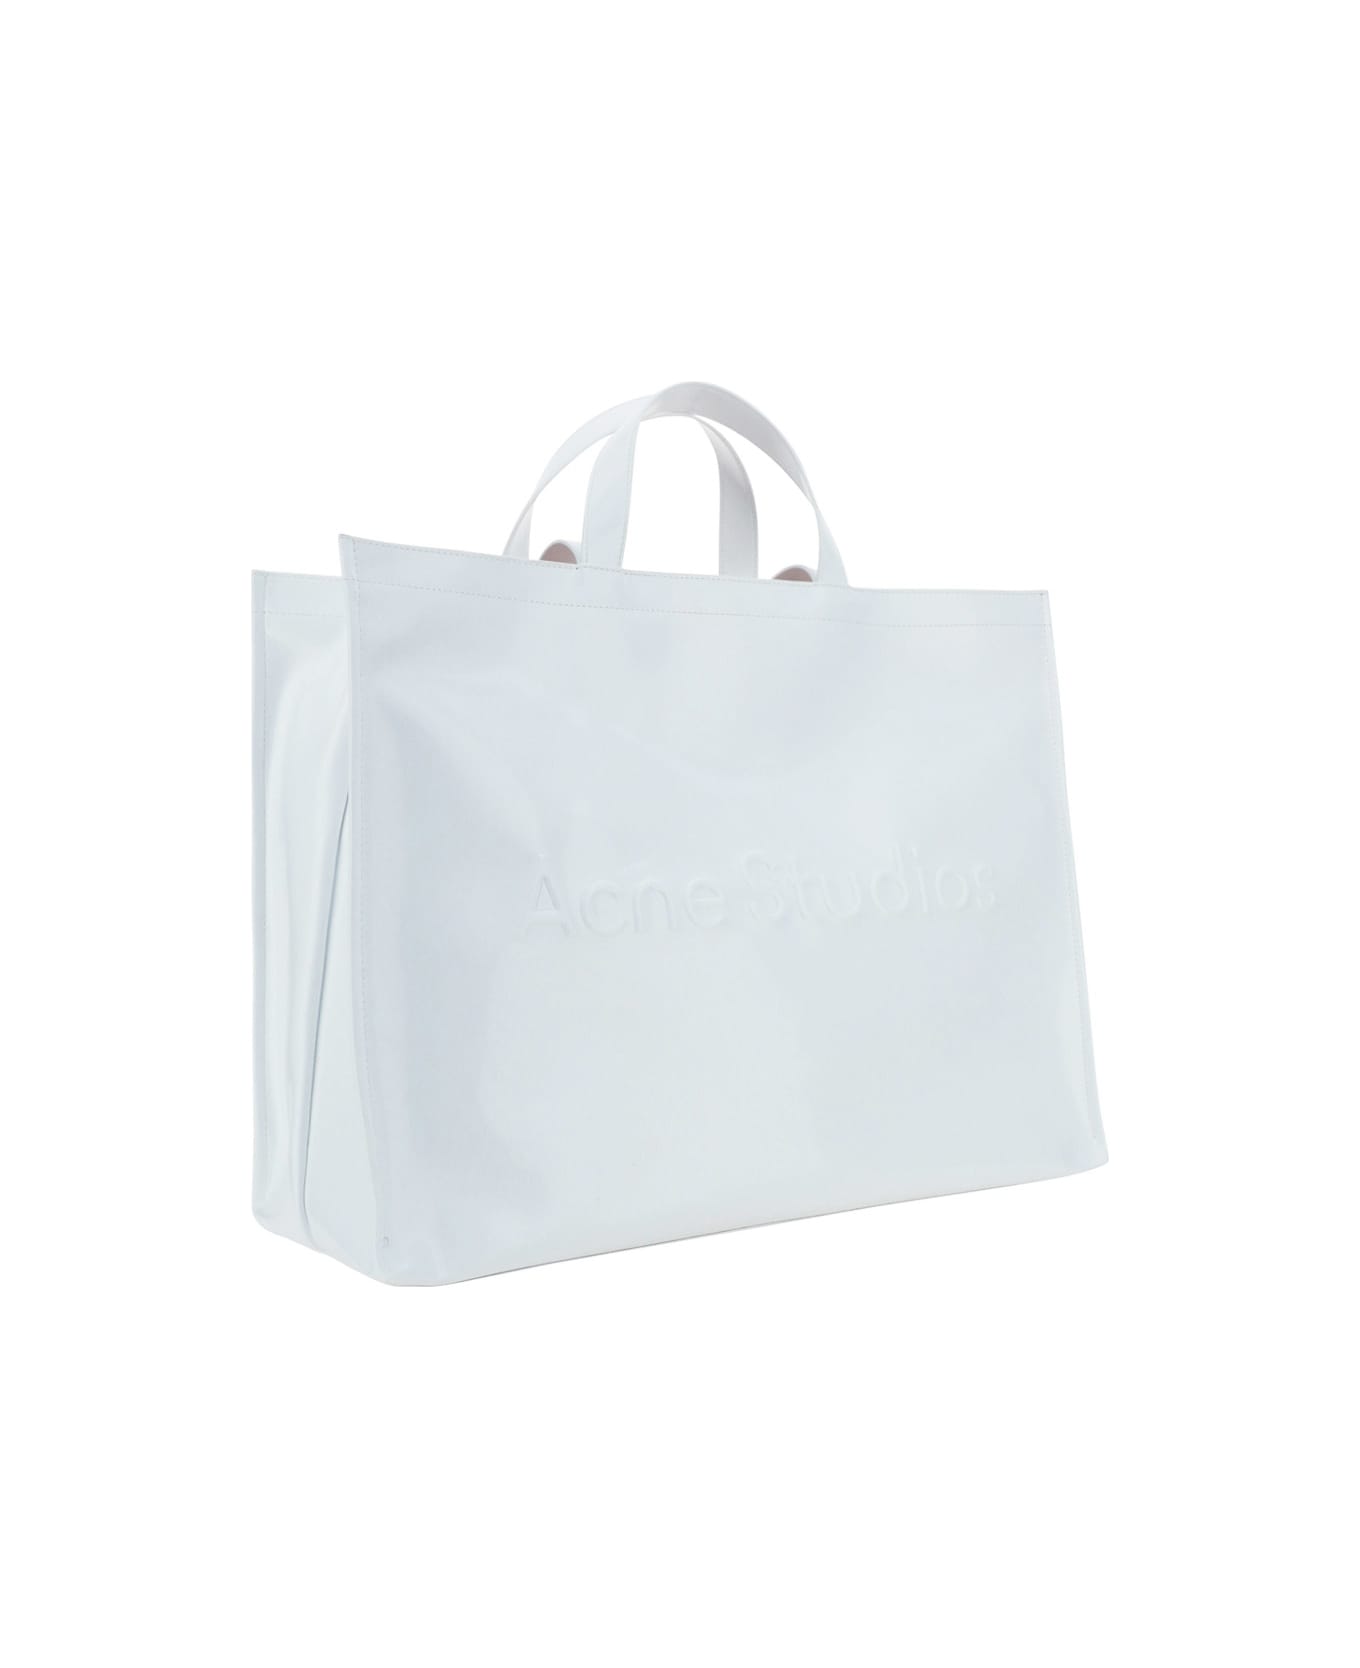 Acne Studios Shopper Bag - White トートバッグ